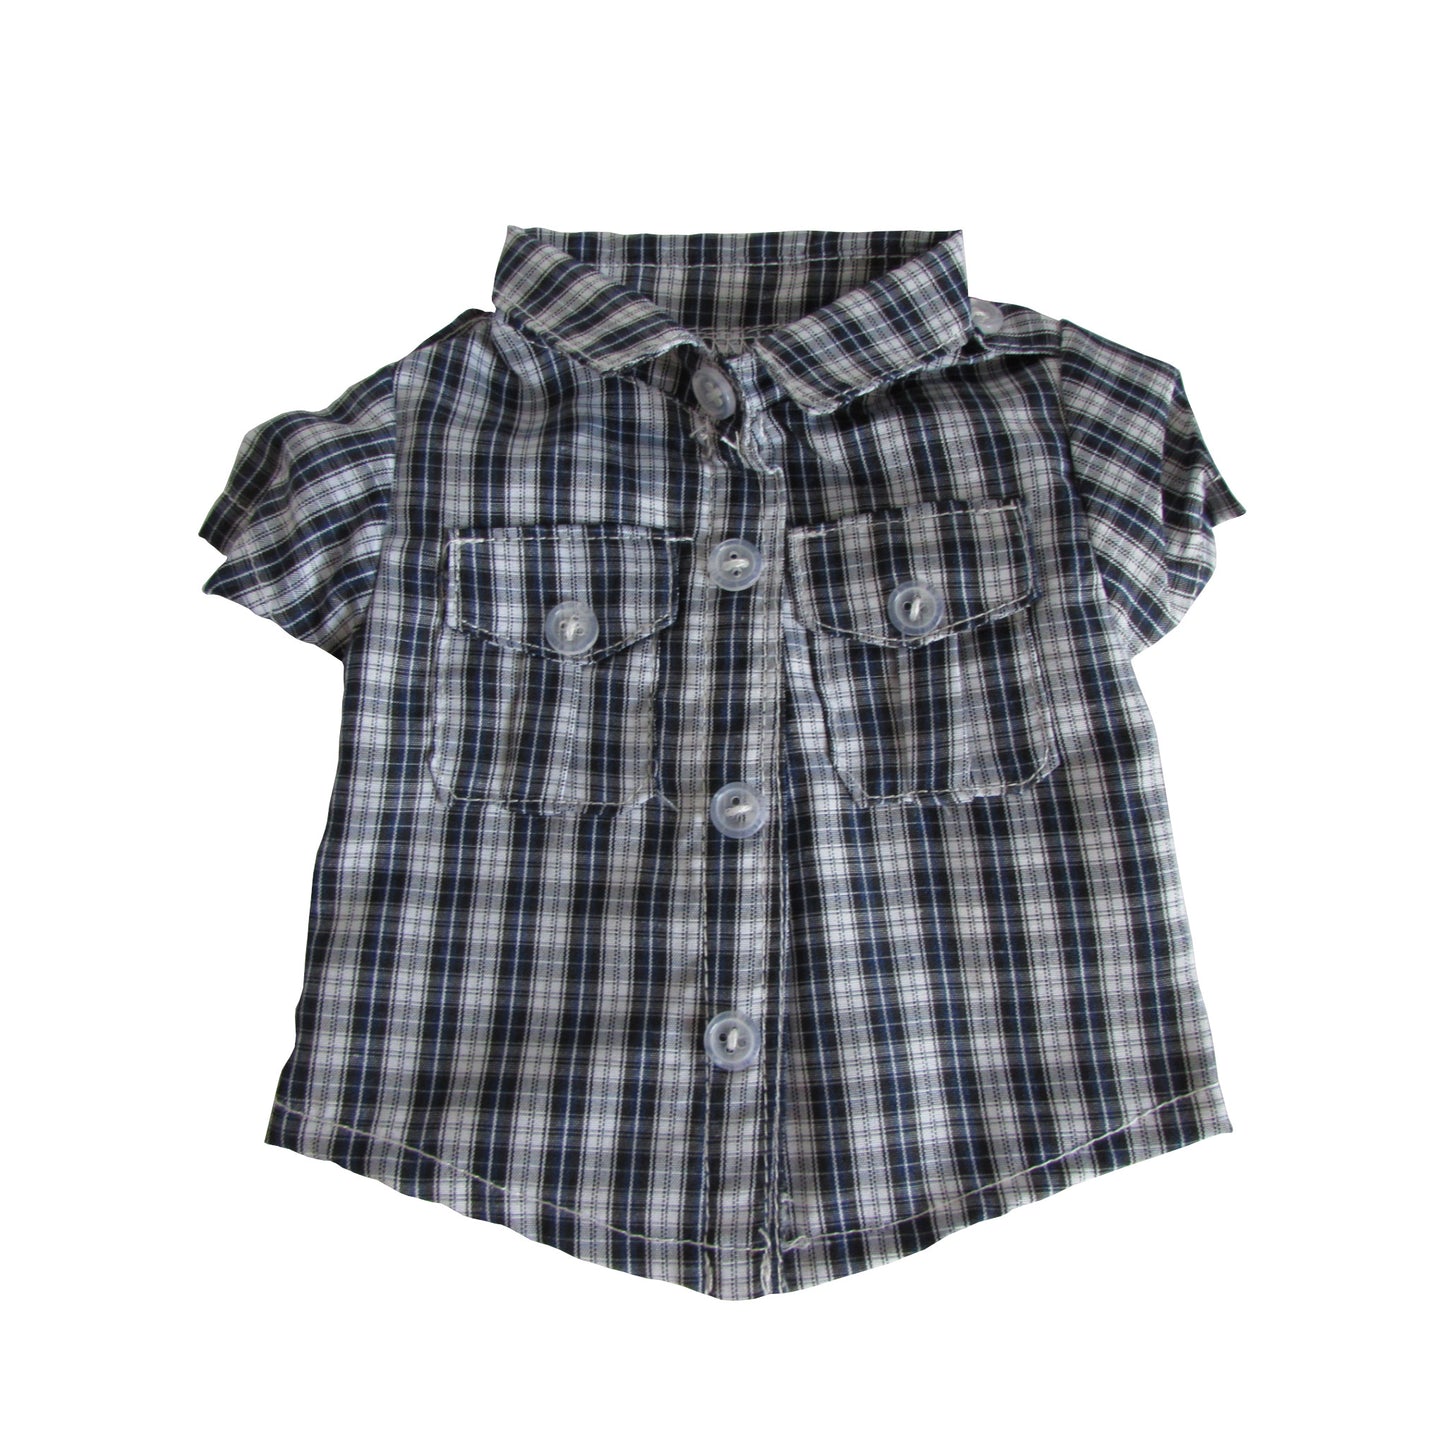 Black Plaid Short Sleeve Shirt for 18-inch dolls